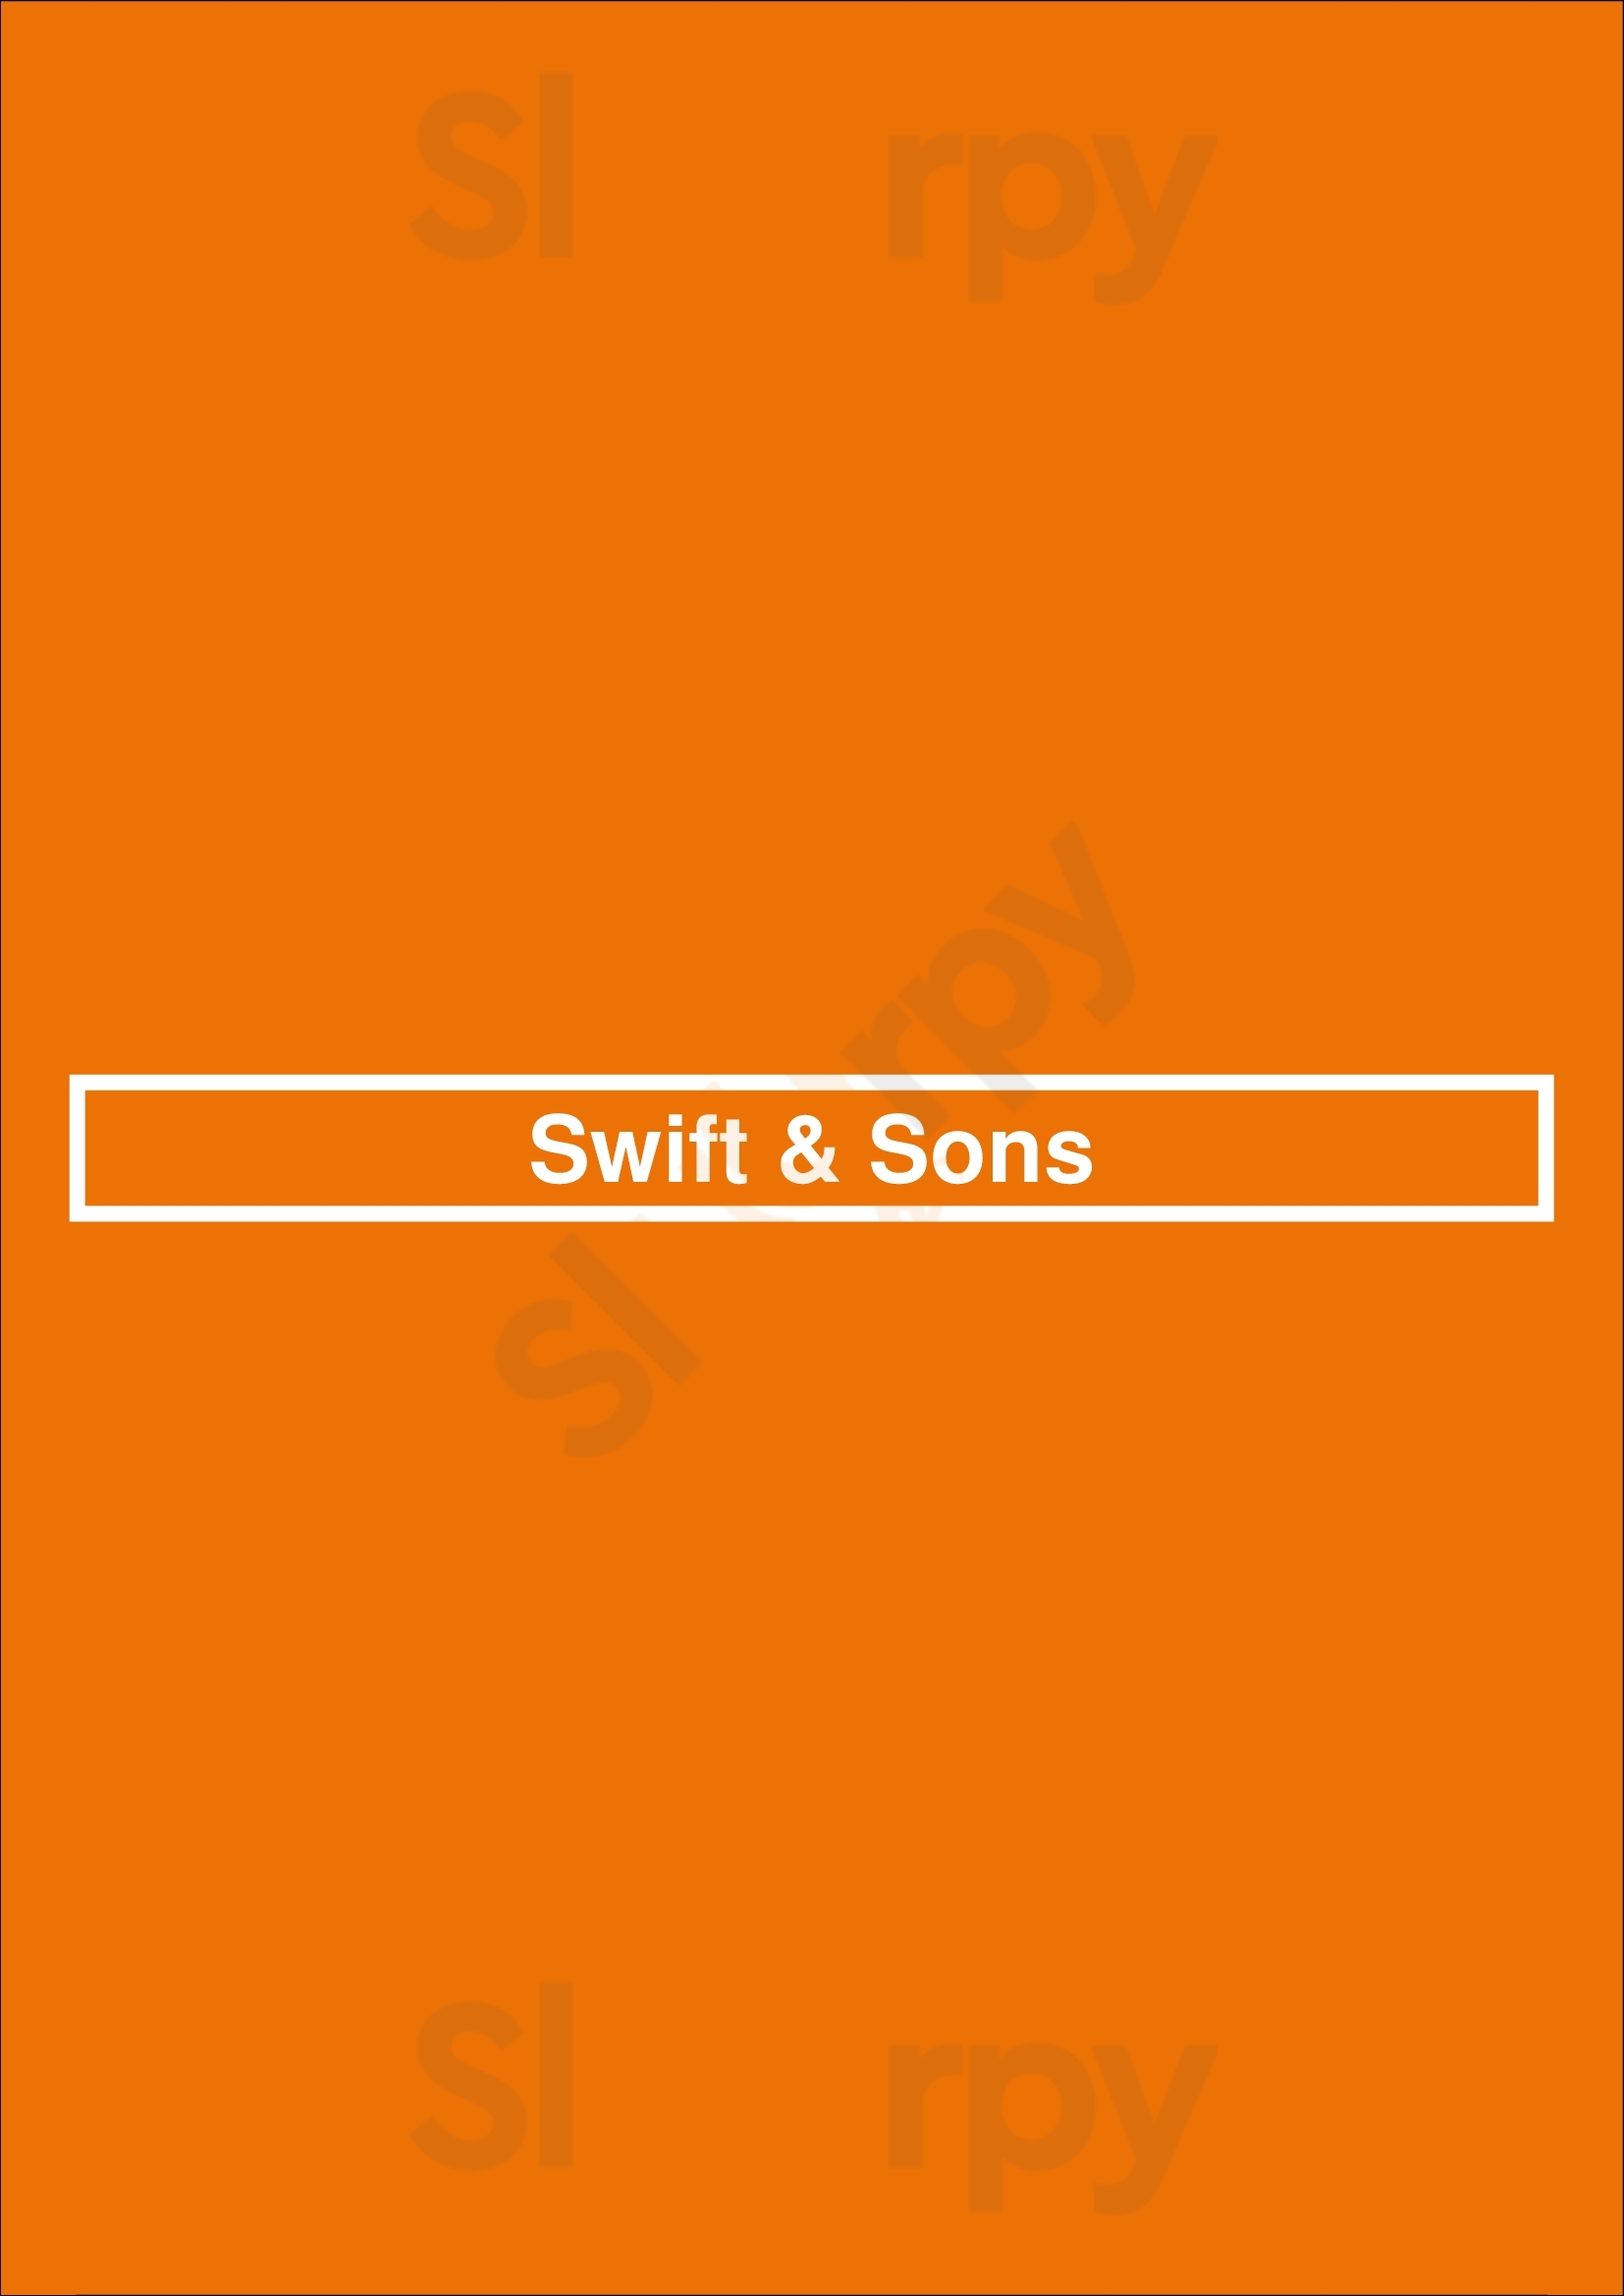 Swift & Sons Chicago Menu - 1